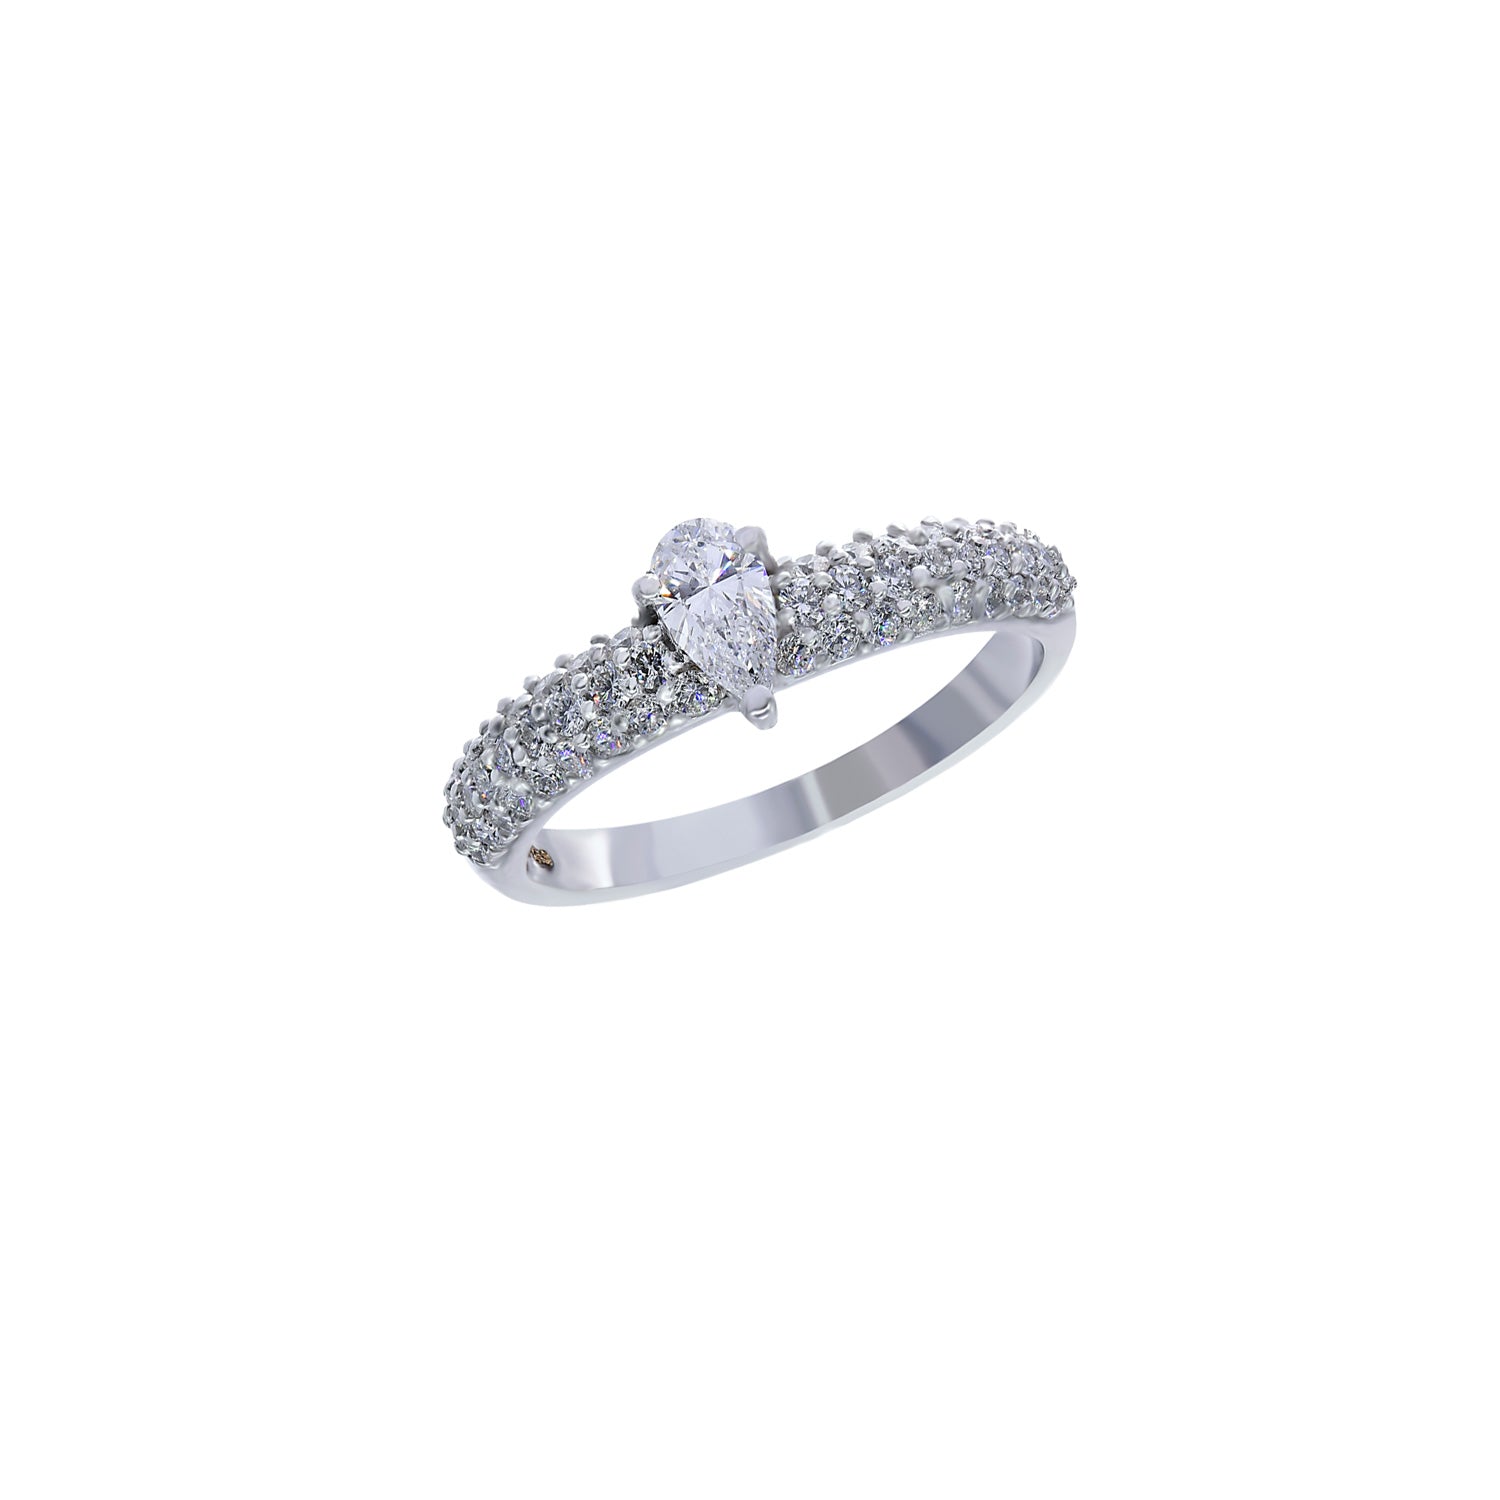 Diamond engagement ring. Pear shaped diamond ring. Engagement ring.